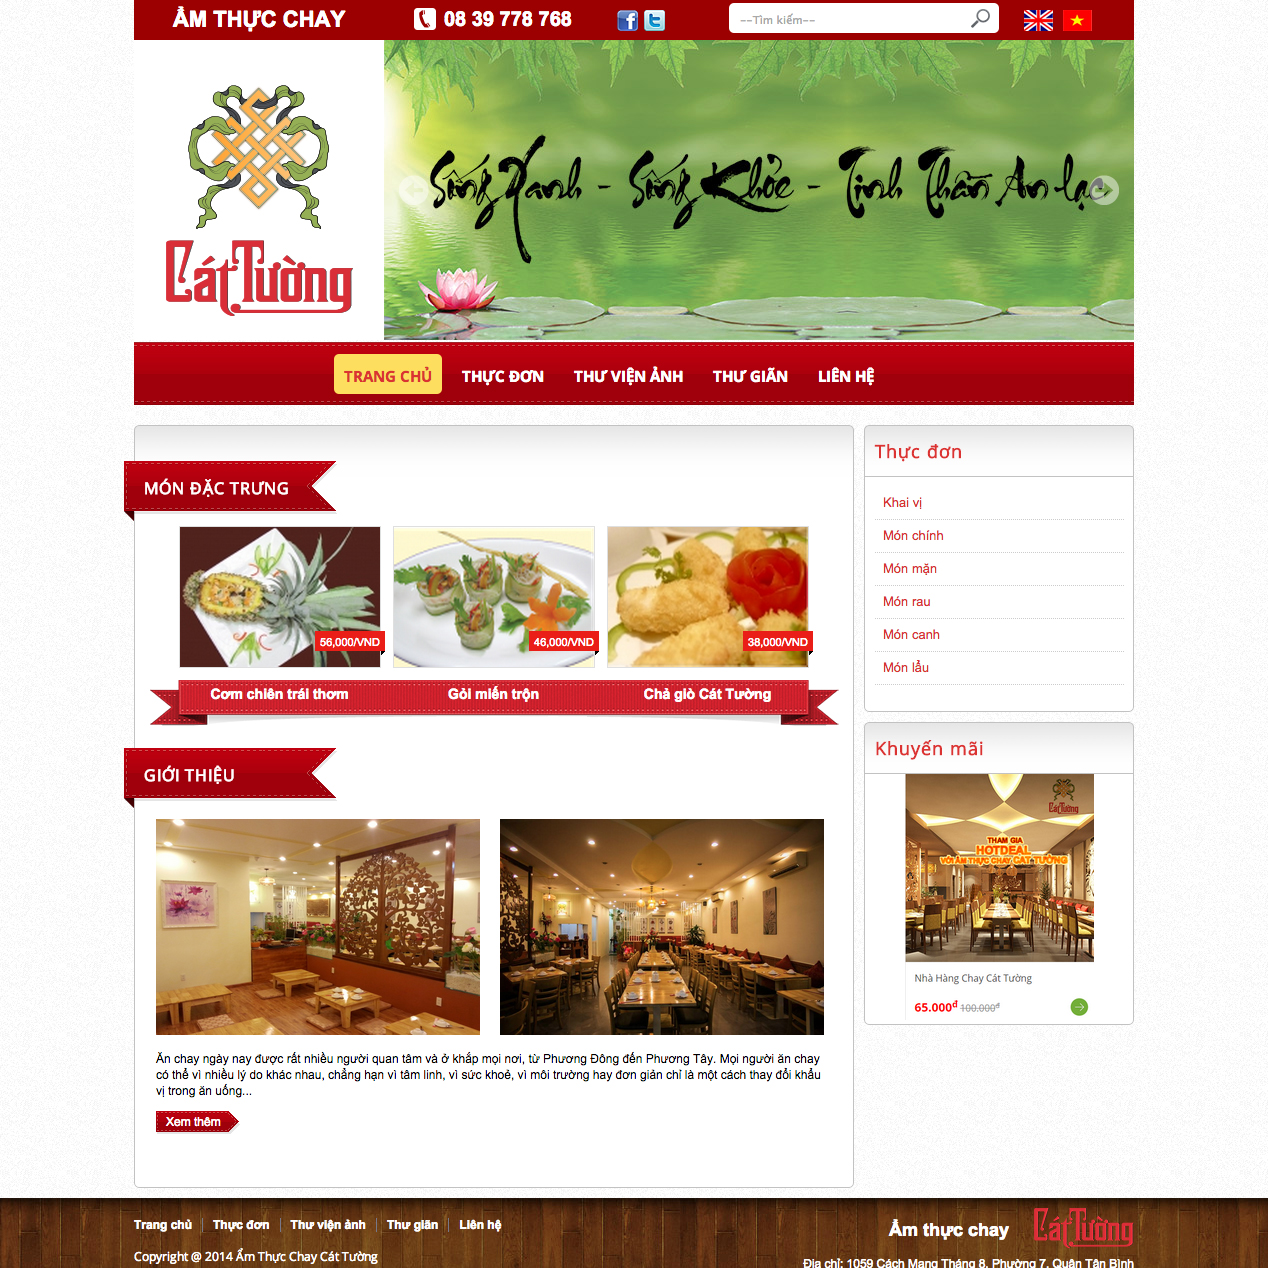 thiet ke web nha hang, thiết kế web nhà hàng, web nha hang, web nhà hàng